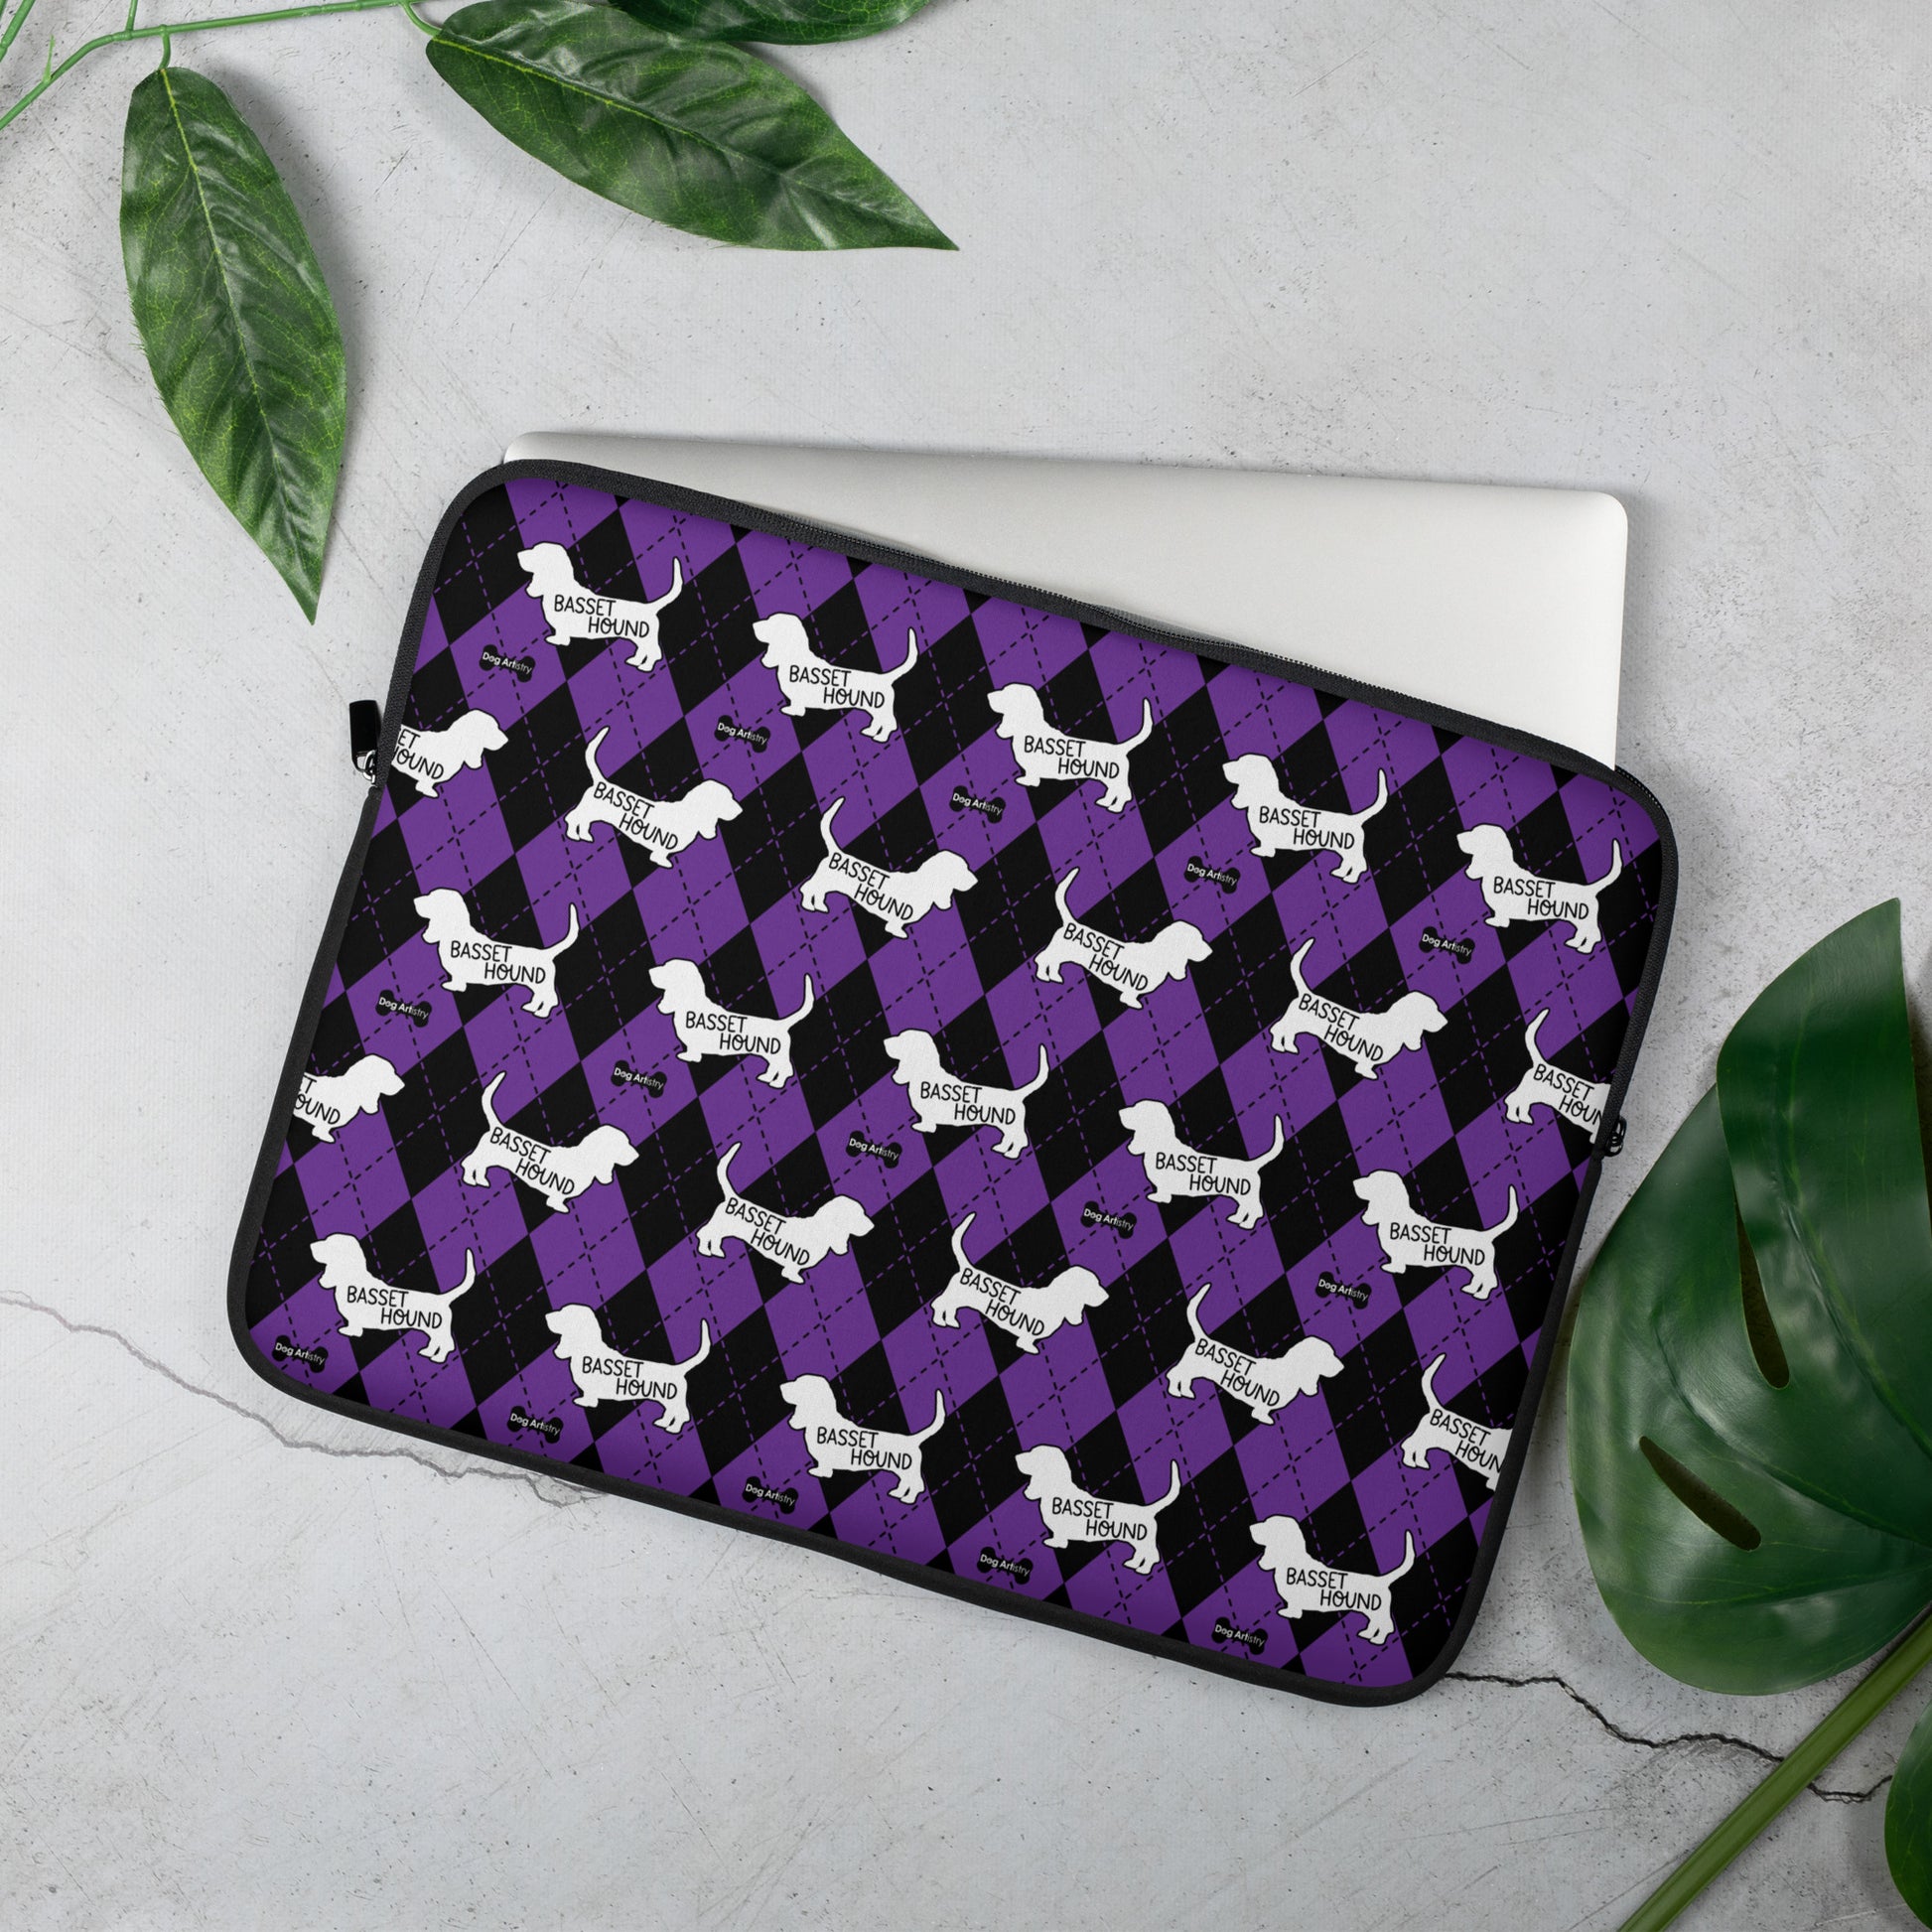 Basset Hound purple and black argyle laptop sleeve by Dog Artistry